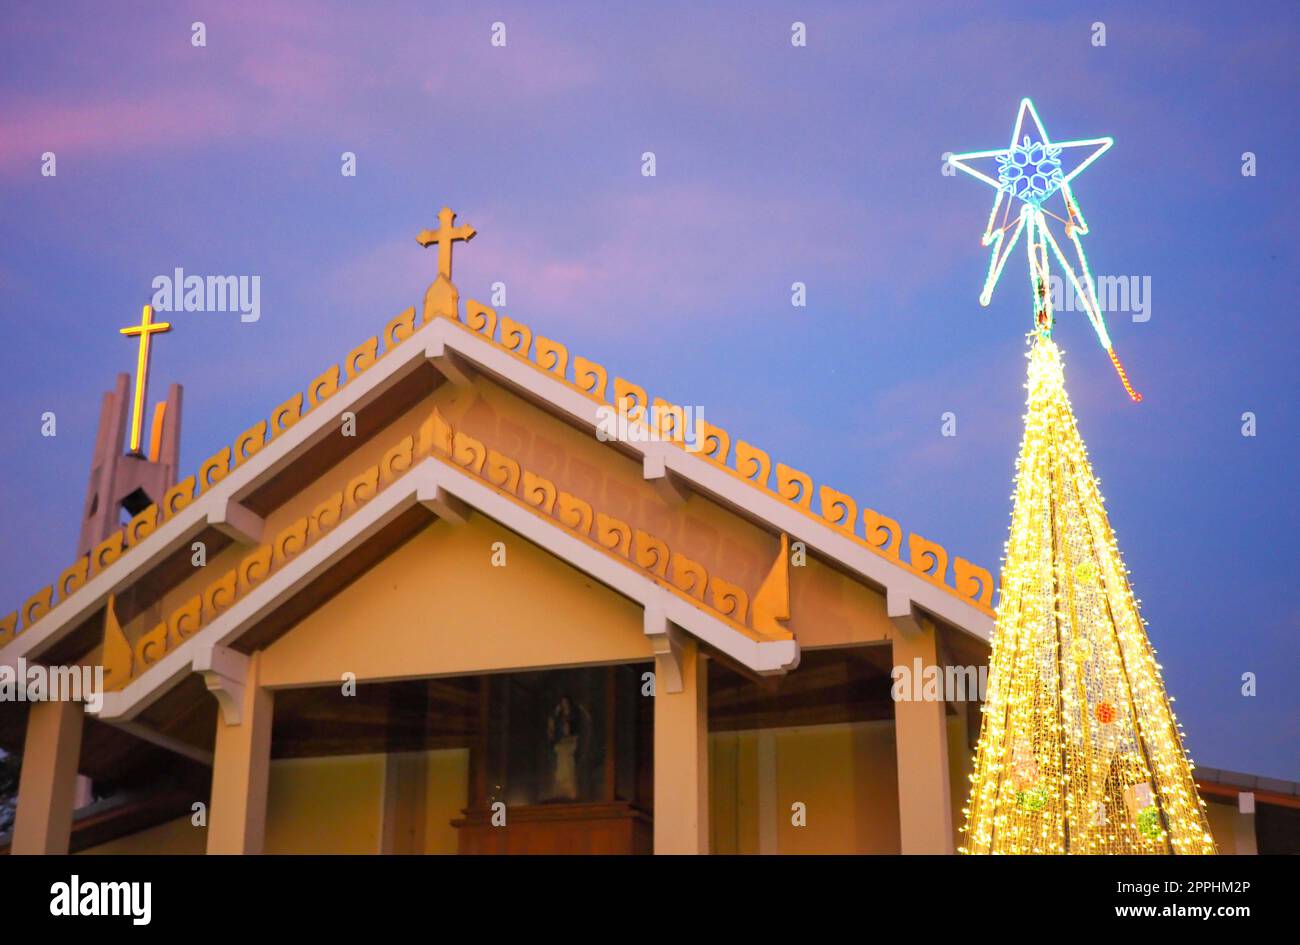 Catholic church with Christmas tree and lights at night Stock Photo